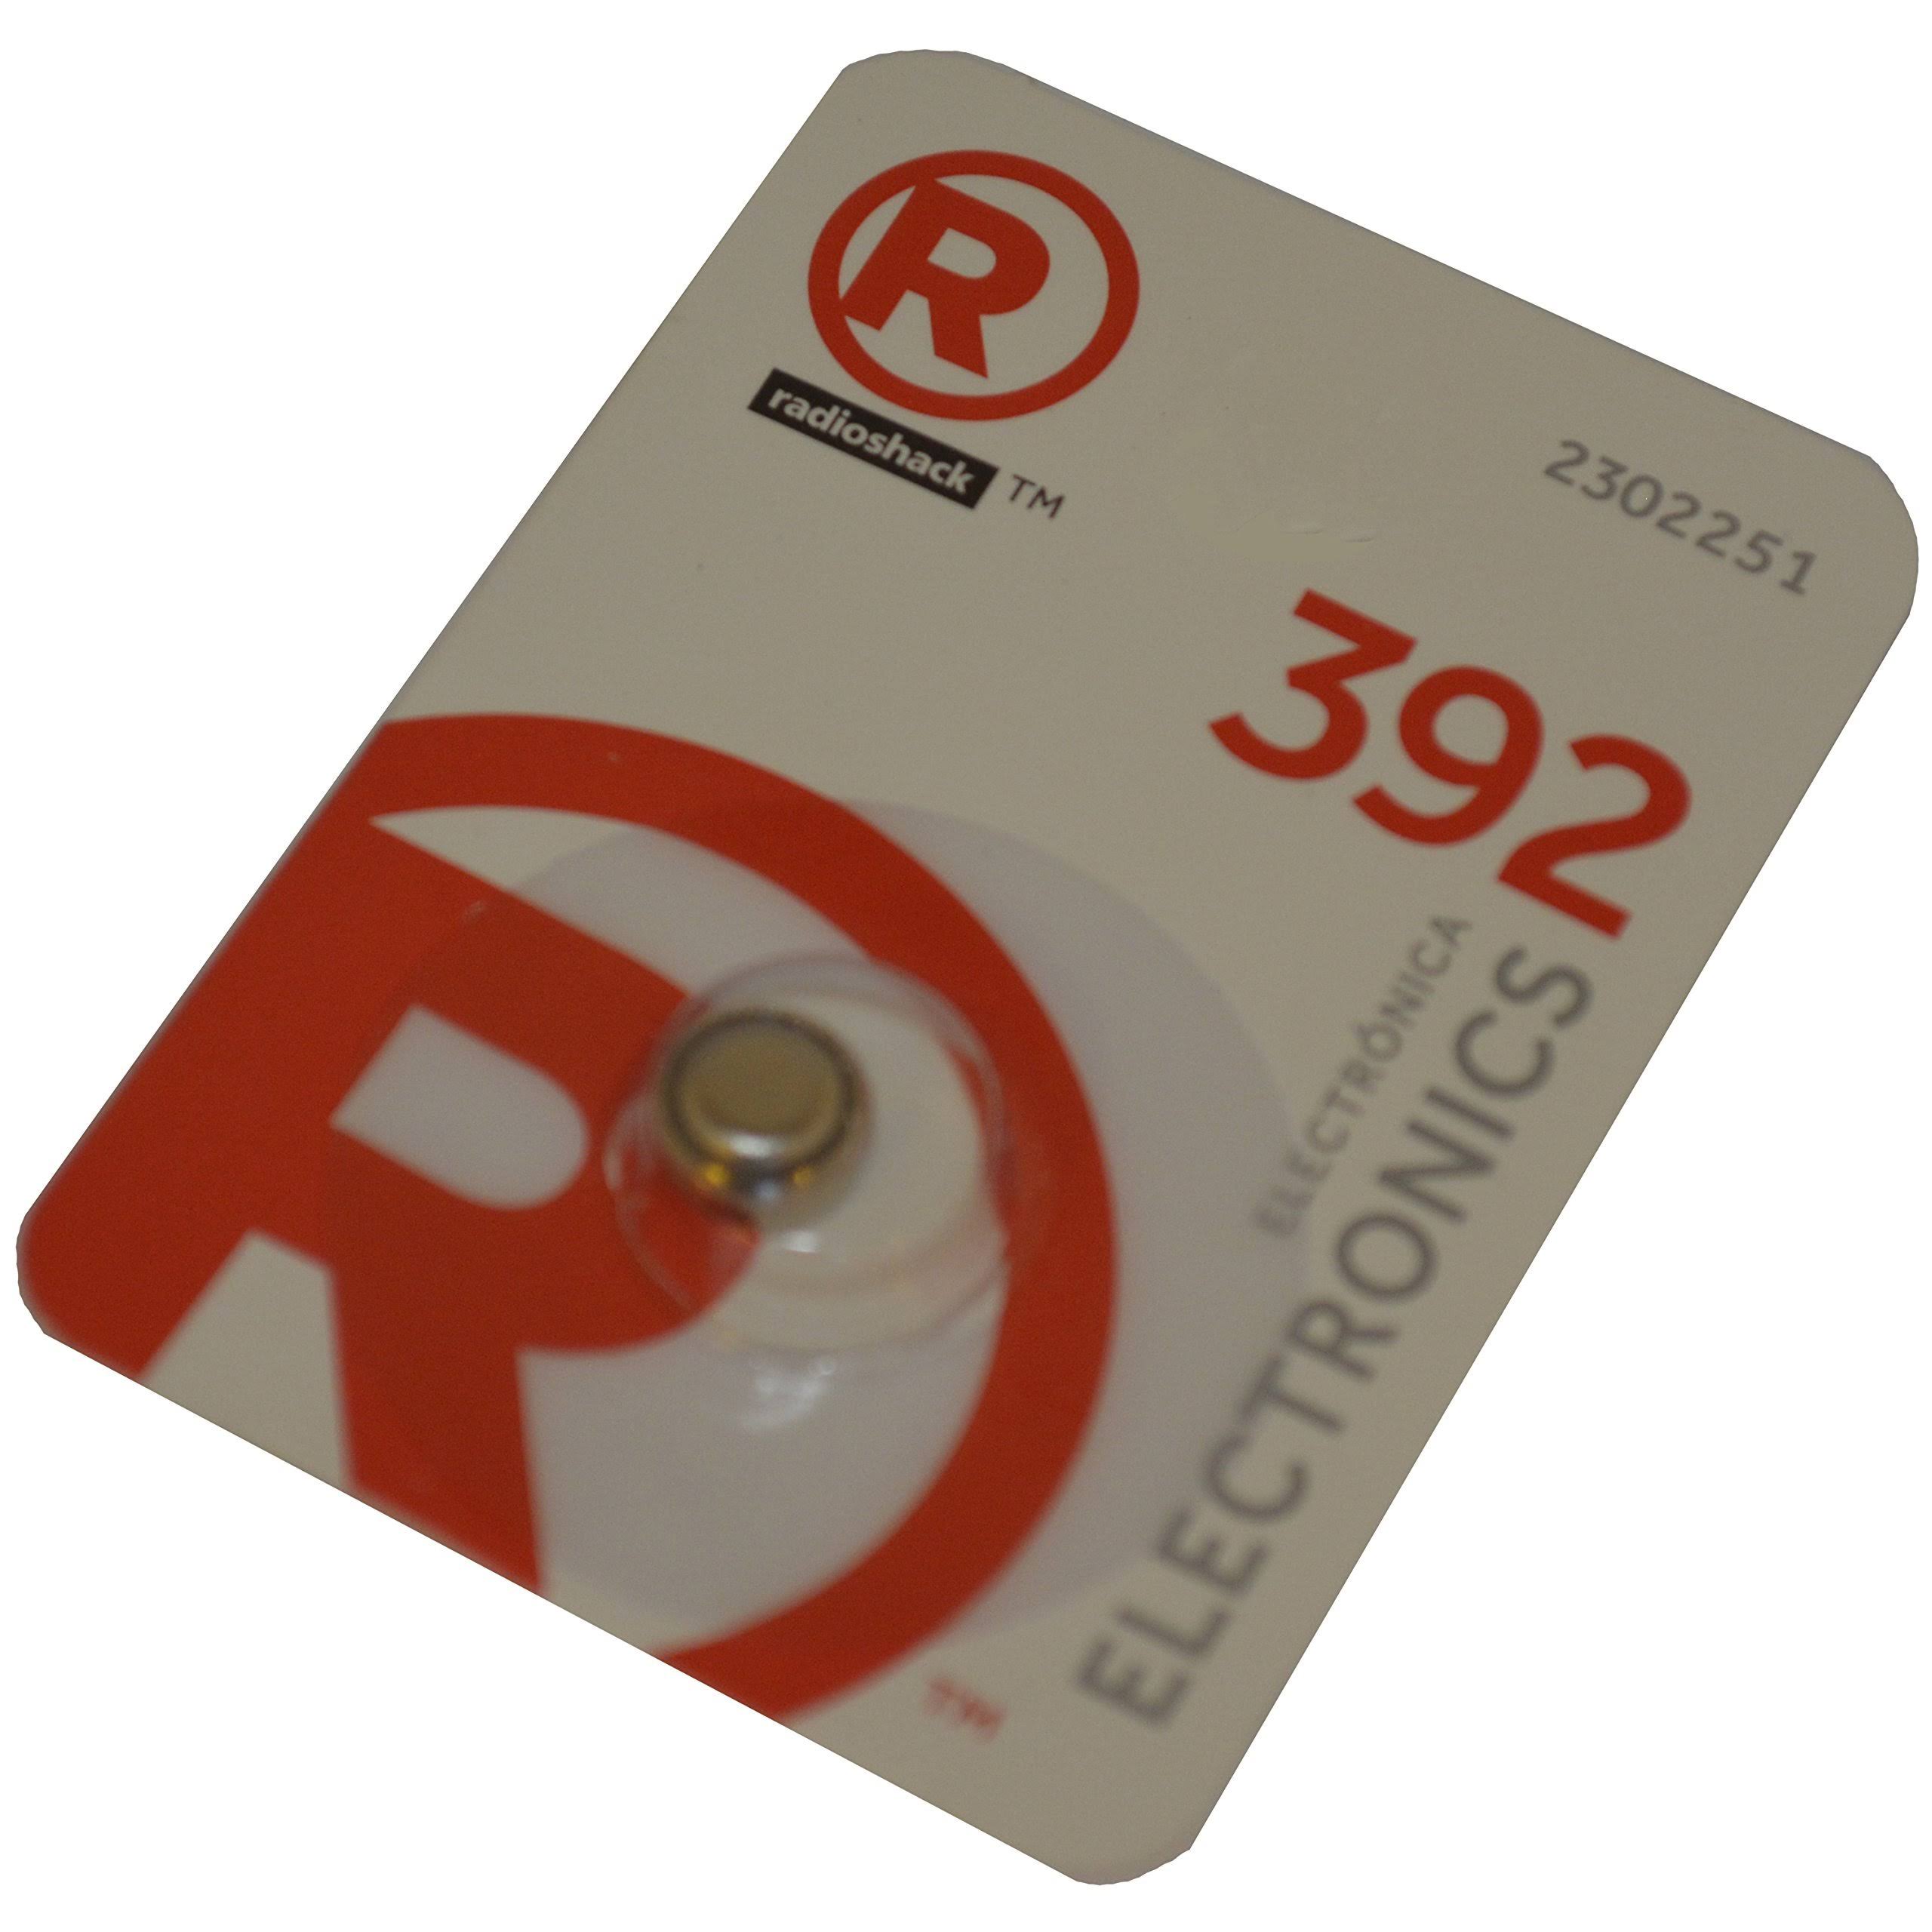 RadioShack 392/384 1.55v Silver-Oxide Button Cell Battery